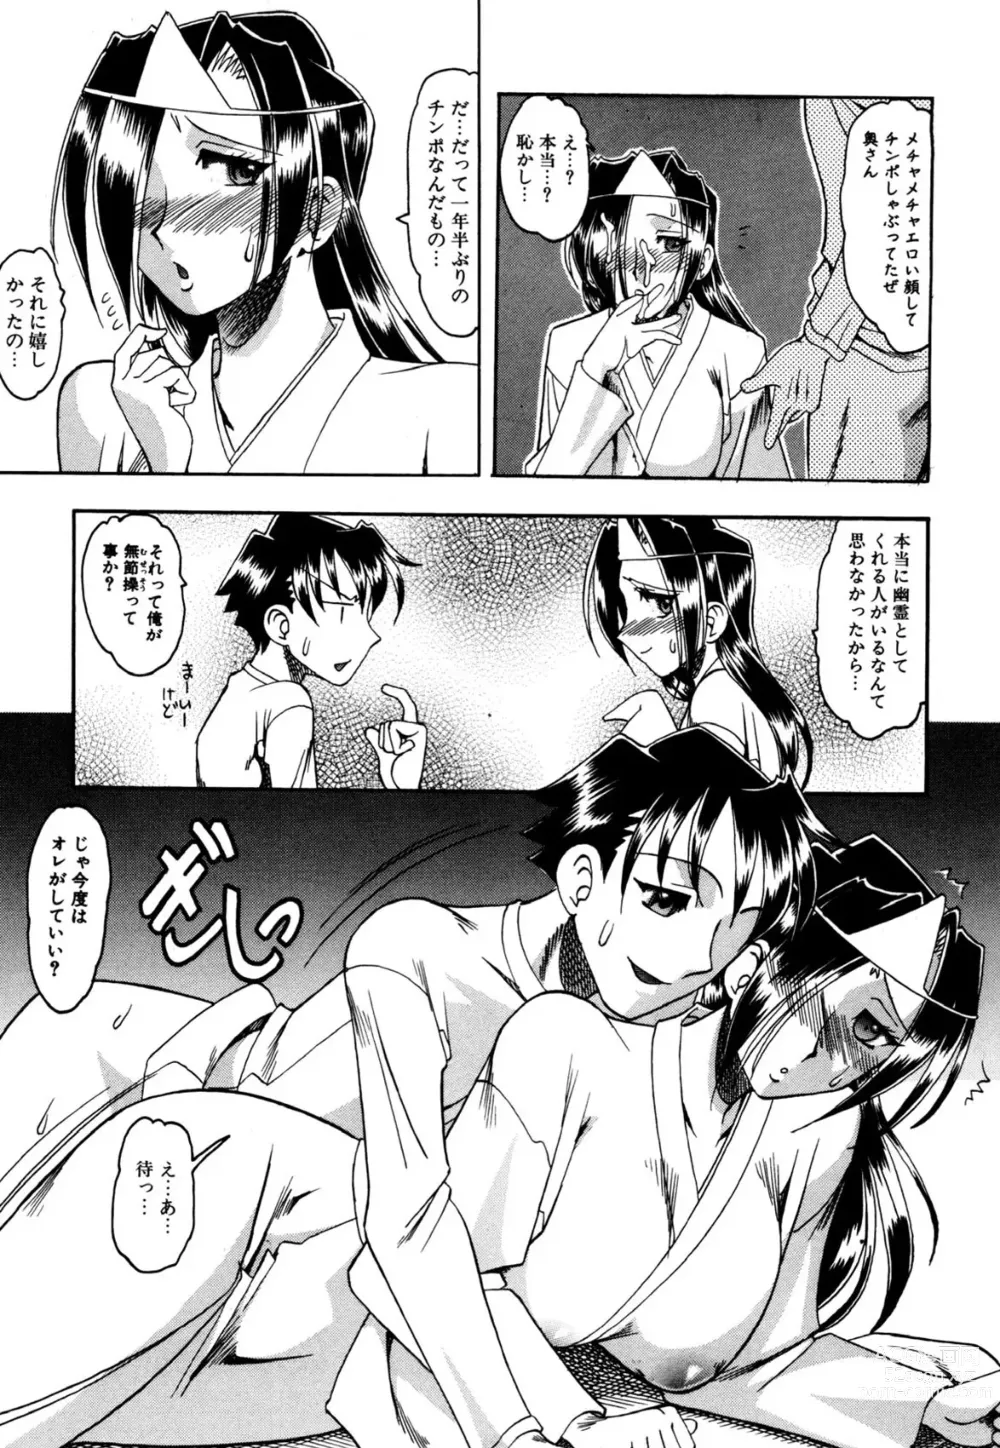 Page 136 of manga Mizugism